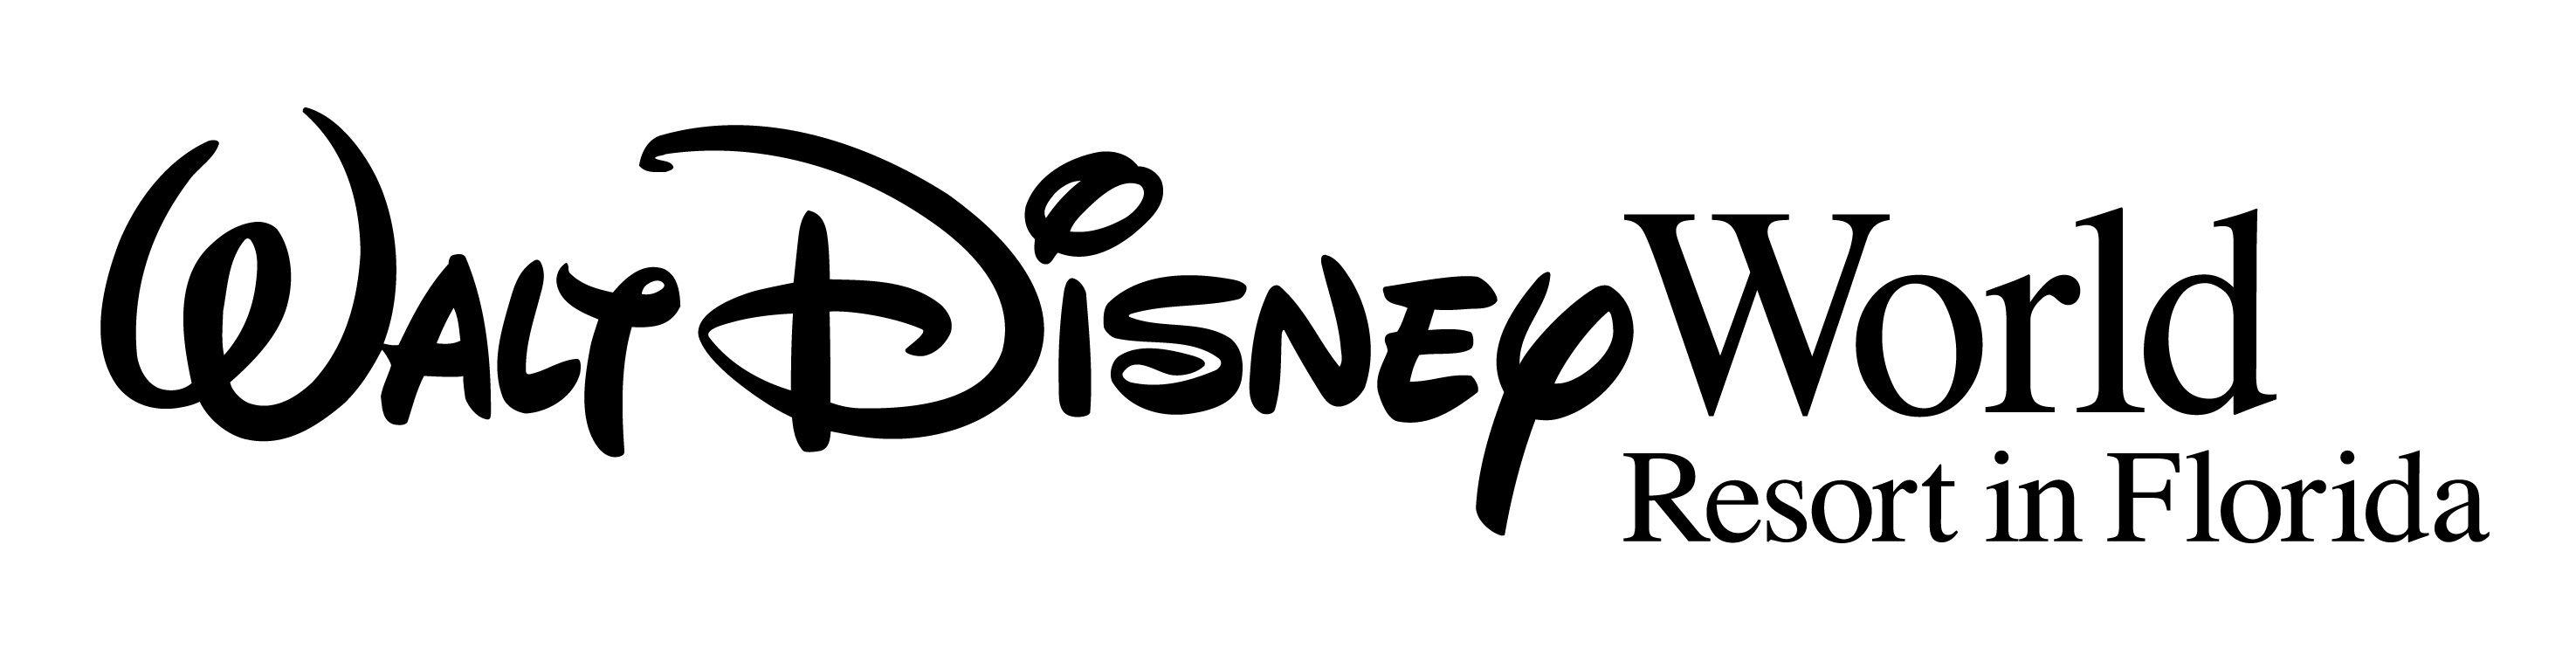 Walt Disney World Orlando Logo - Walt Disney World Resort in Florida